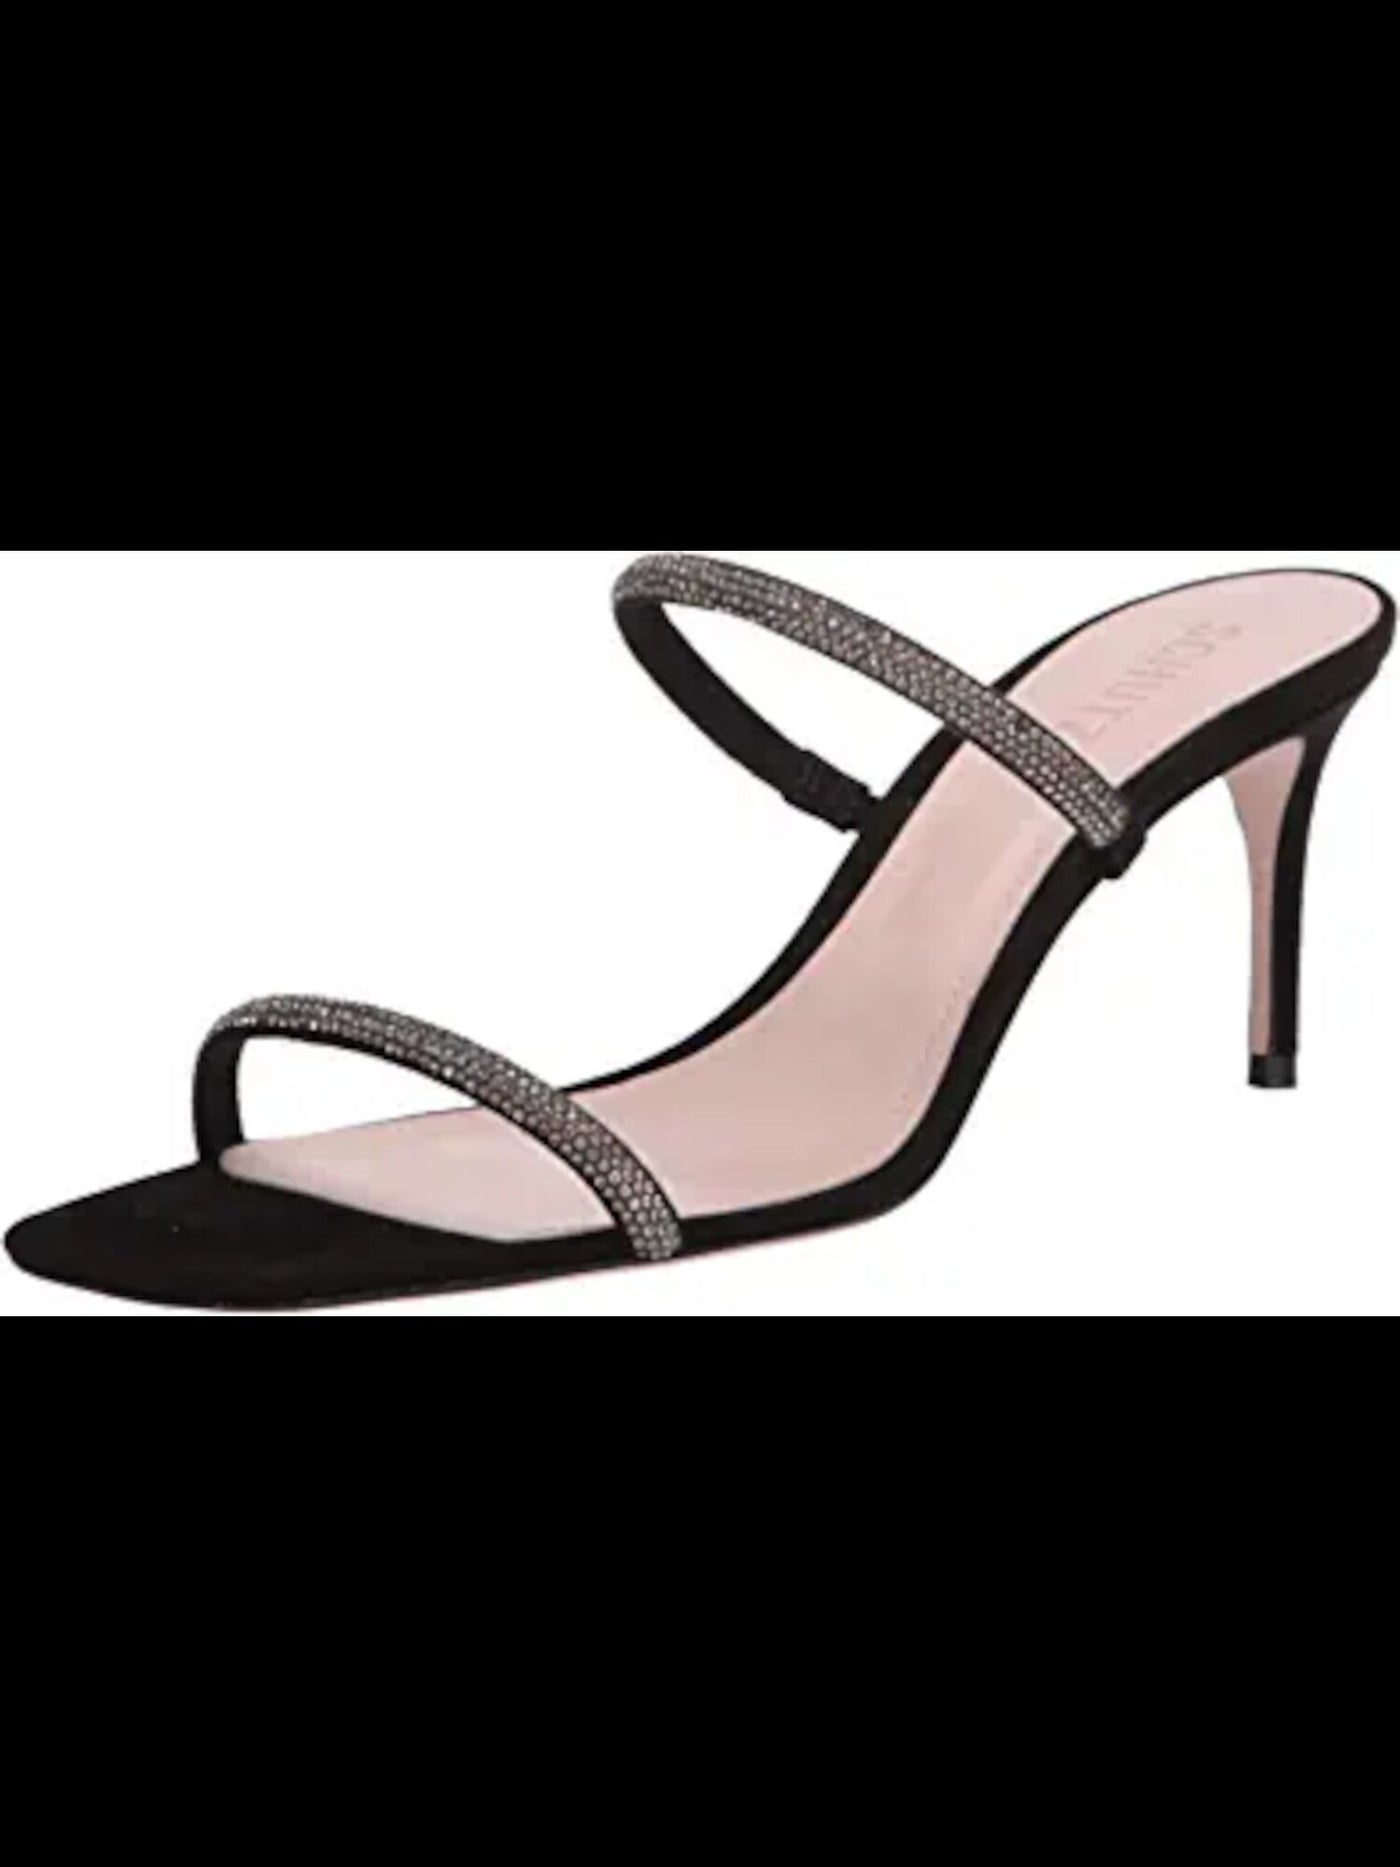 SCHUTZ Womens Black Rhinestone Padded Taleen Square Toe Stiletto Slip On Leather Slide Sandals Shoes 7.5 B